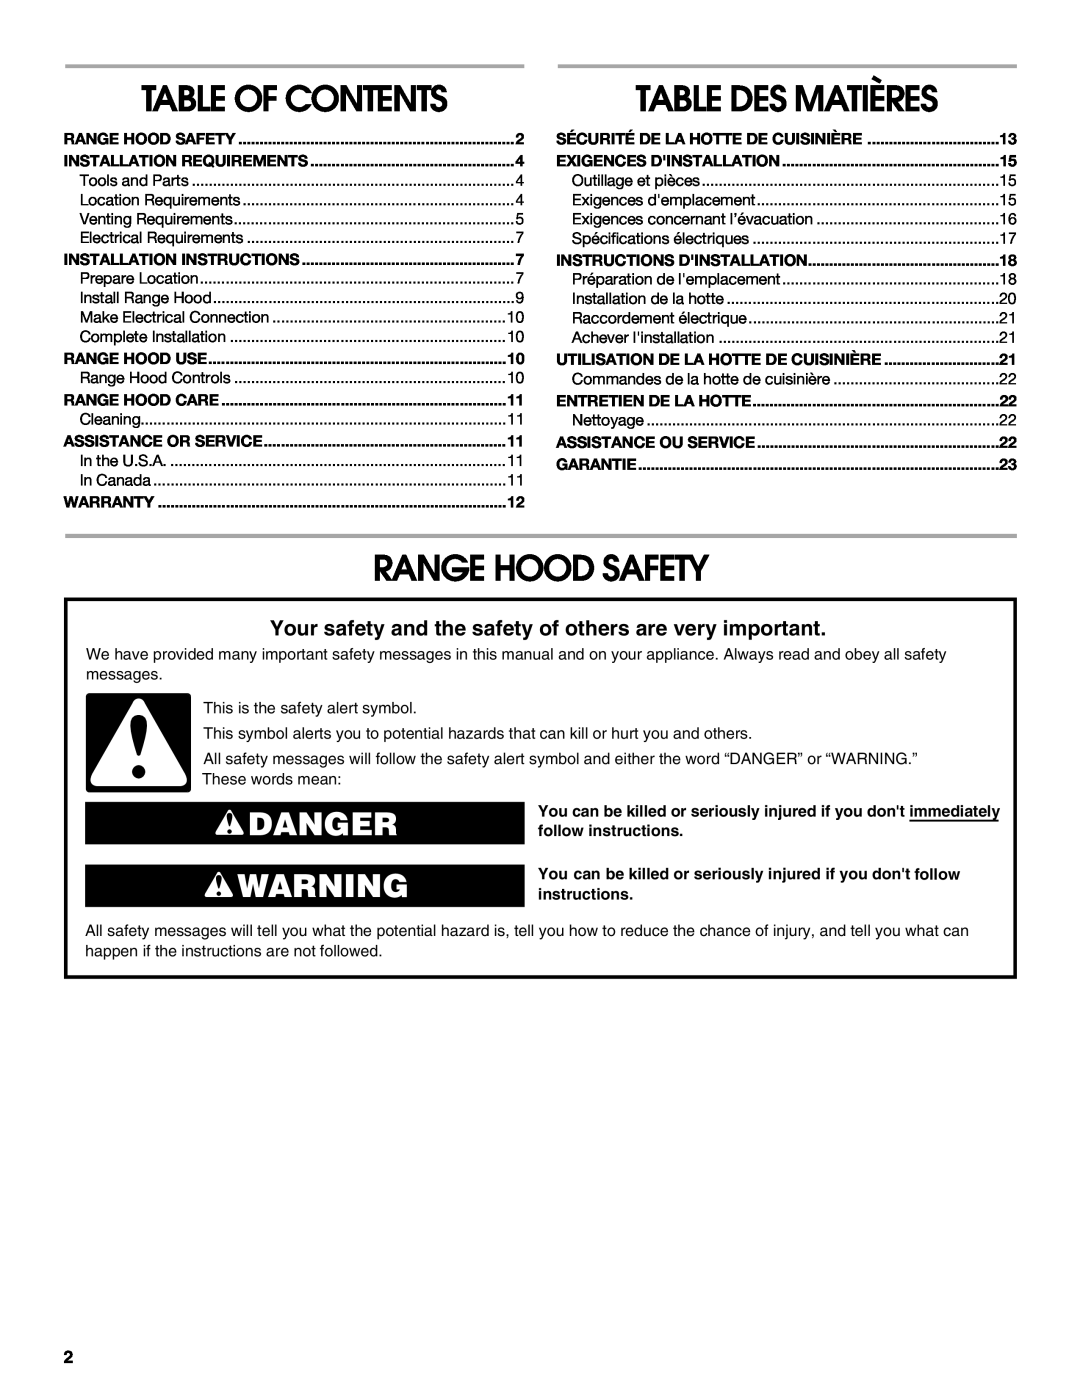 Whirlpool 30" (76.2 CM) Range Hood Safety, Table Des Matières, Danger, Installation Requirements, Range Hood Use, Warranty 